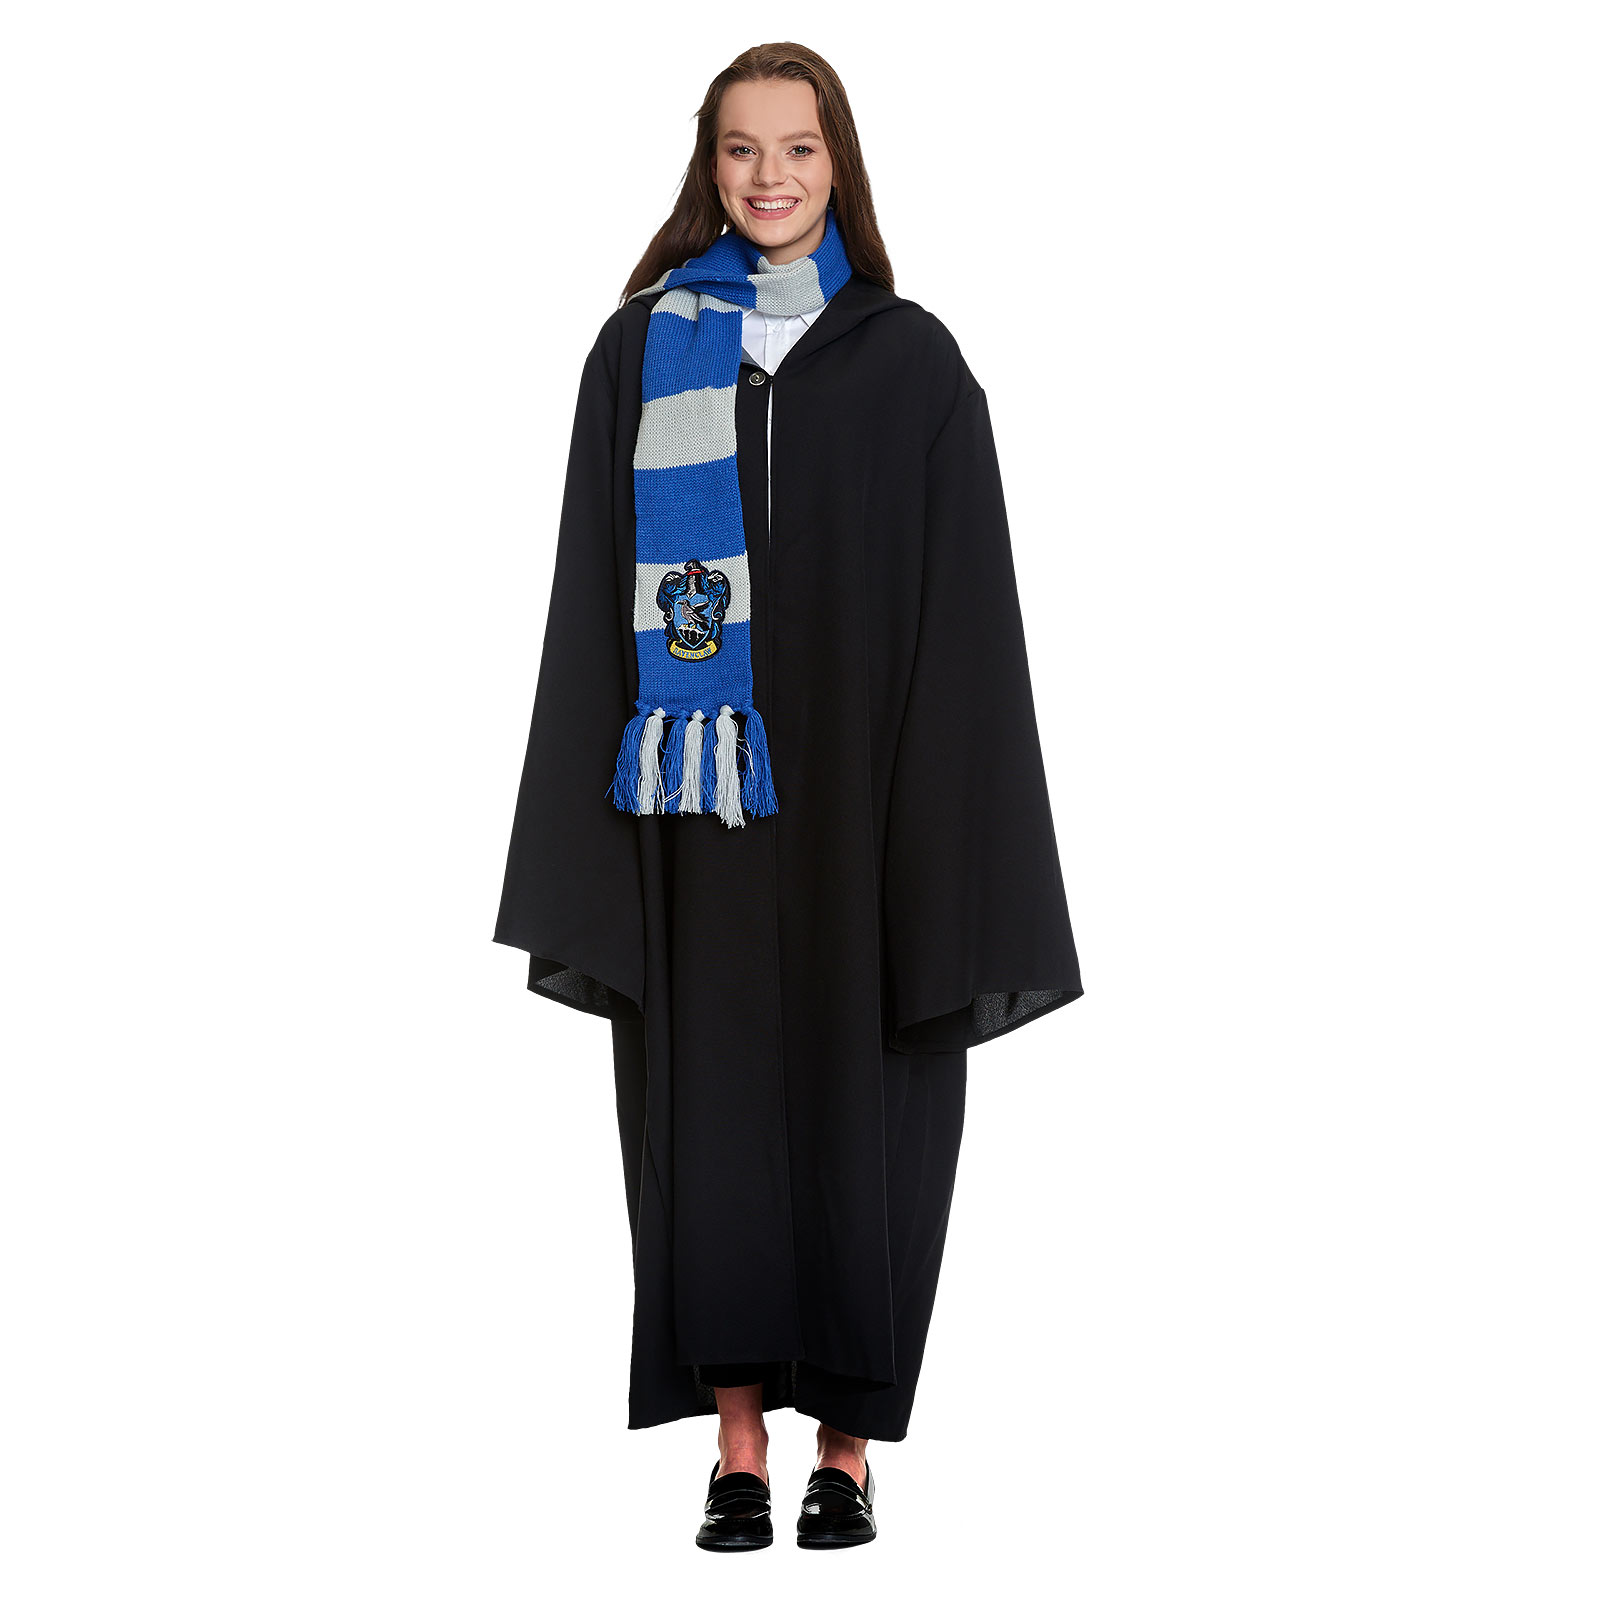 Zauberer Kostüm Robe mit Kapuze für Harry Potter Fans